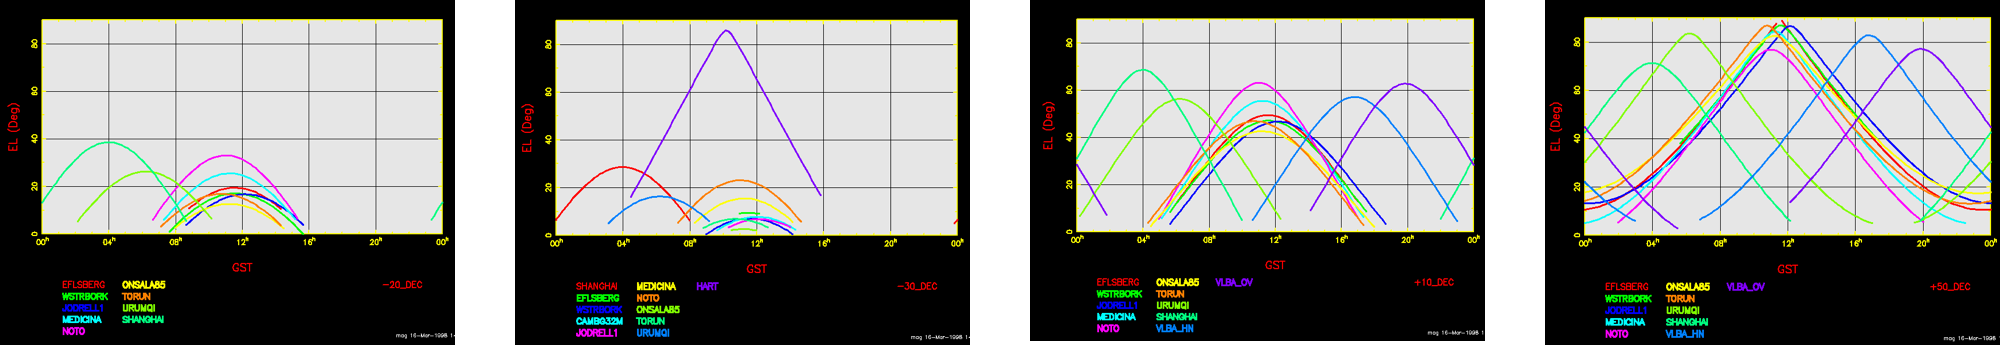 Source visibility elevation plots EVN